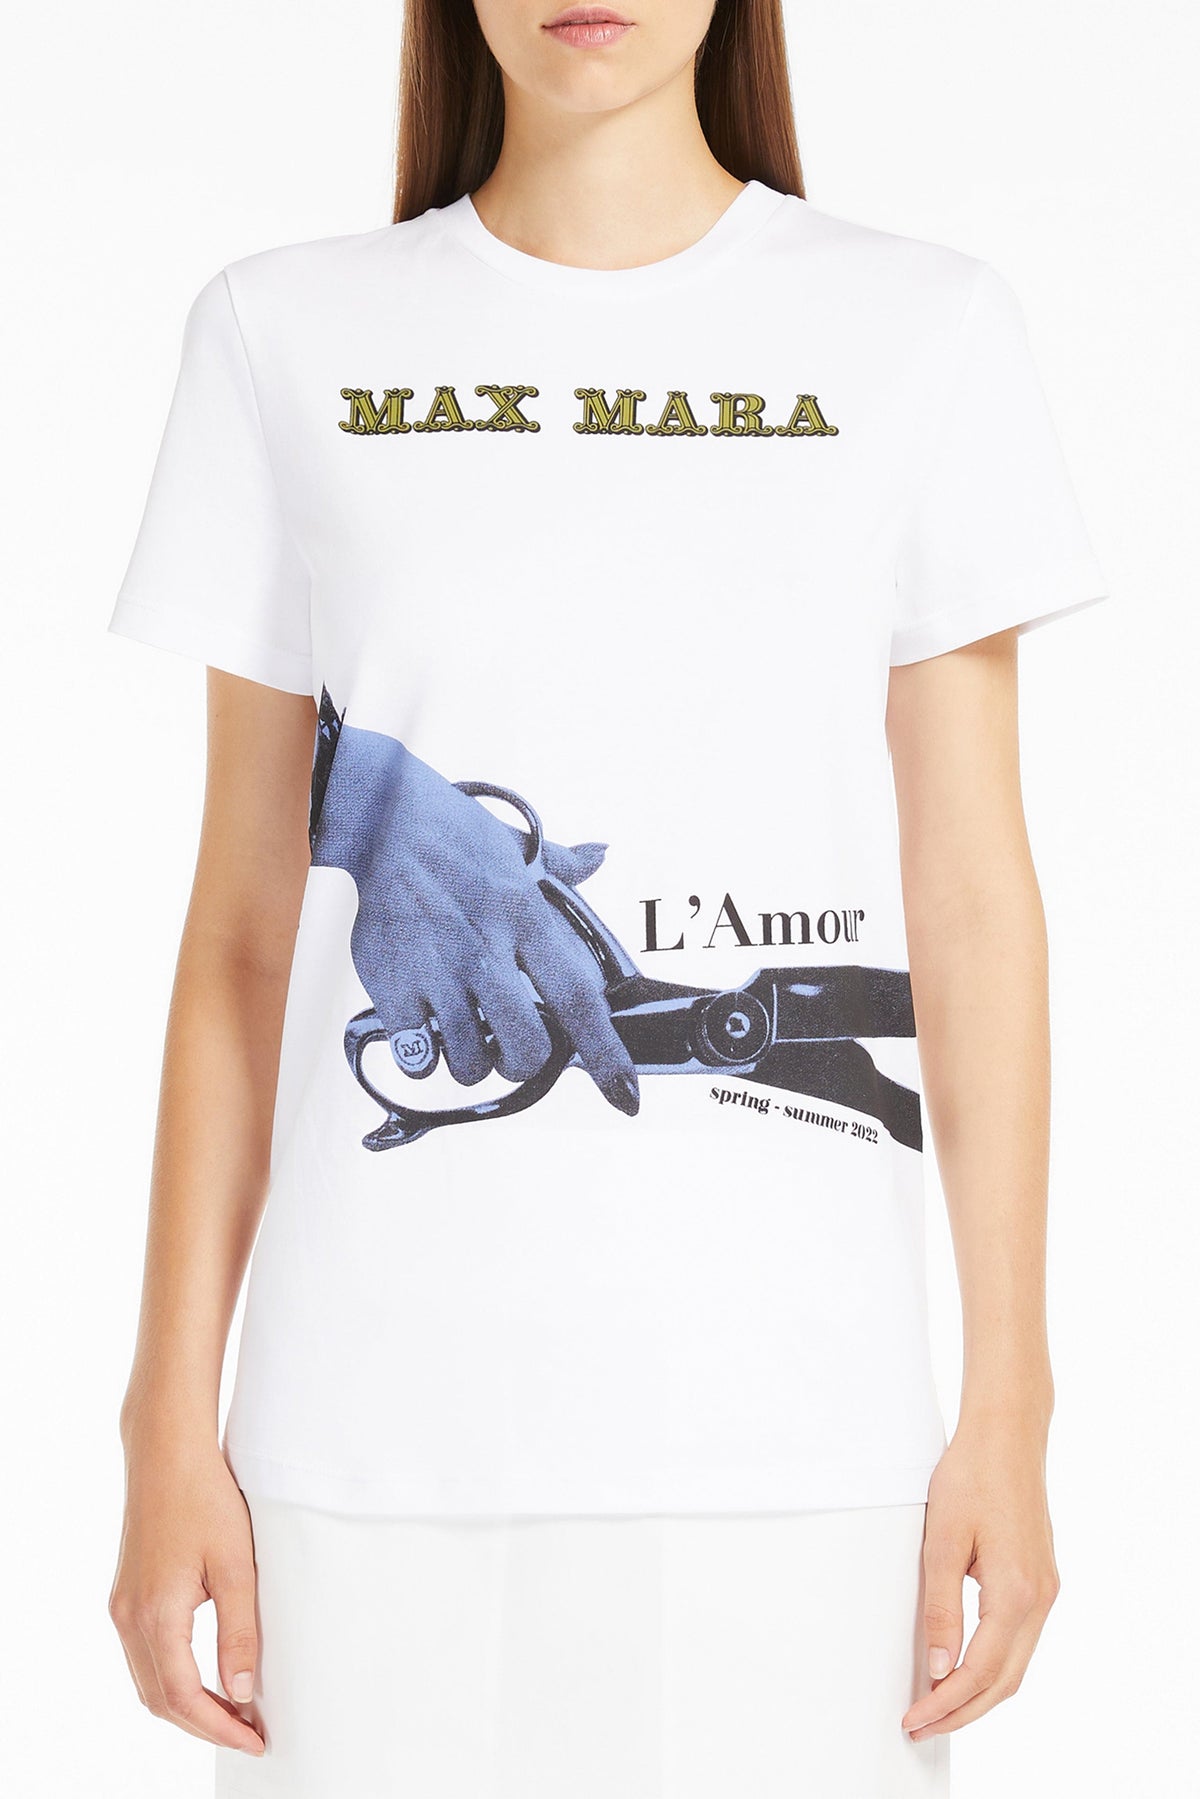 MAXMARA BODY/ TOP  T-shirt in Cotone Fantasia Veggia Max Mara